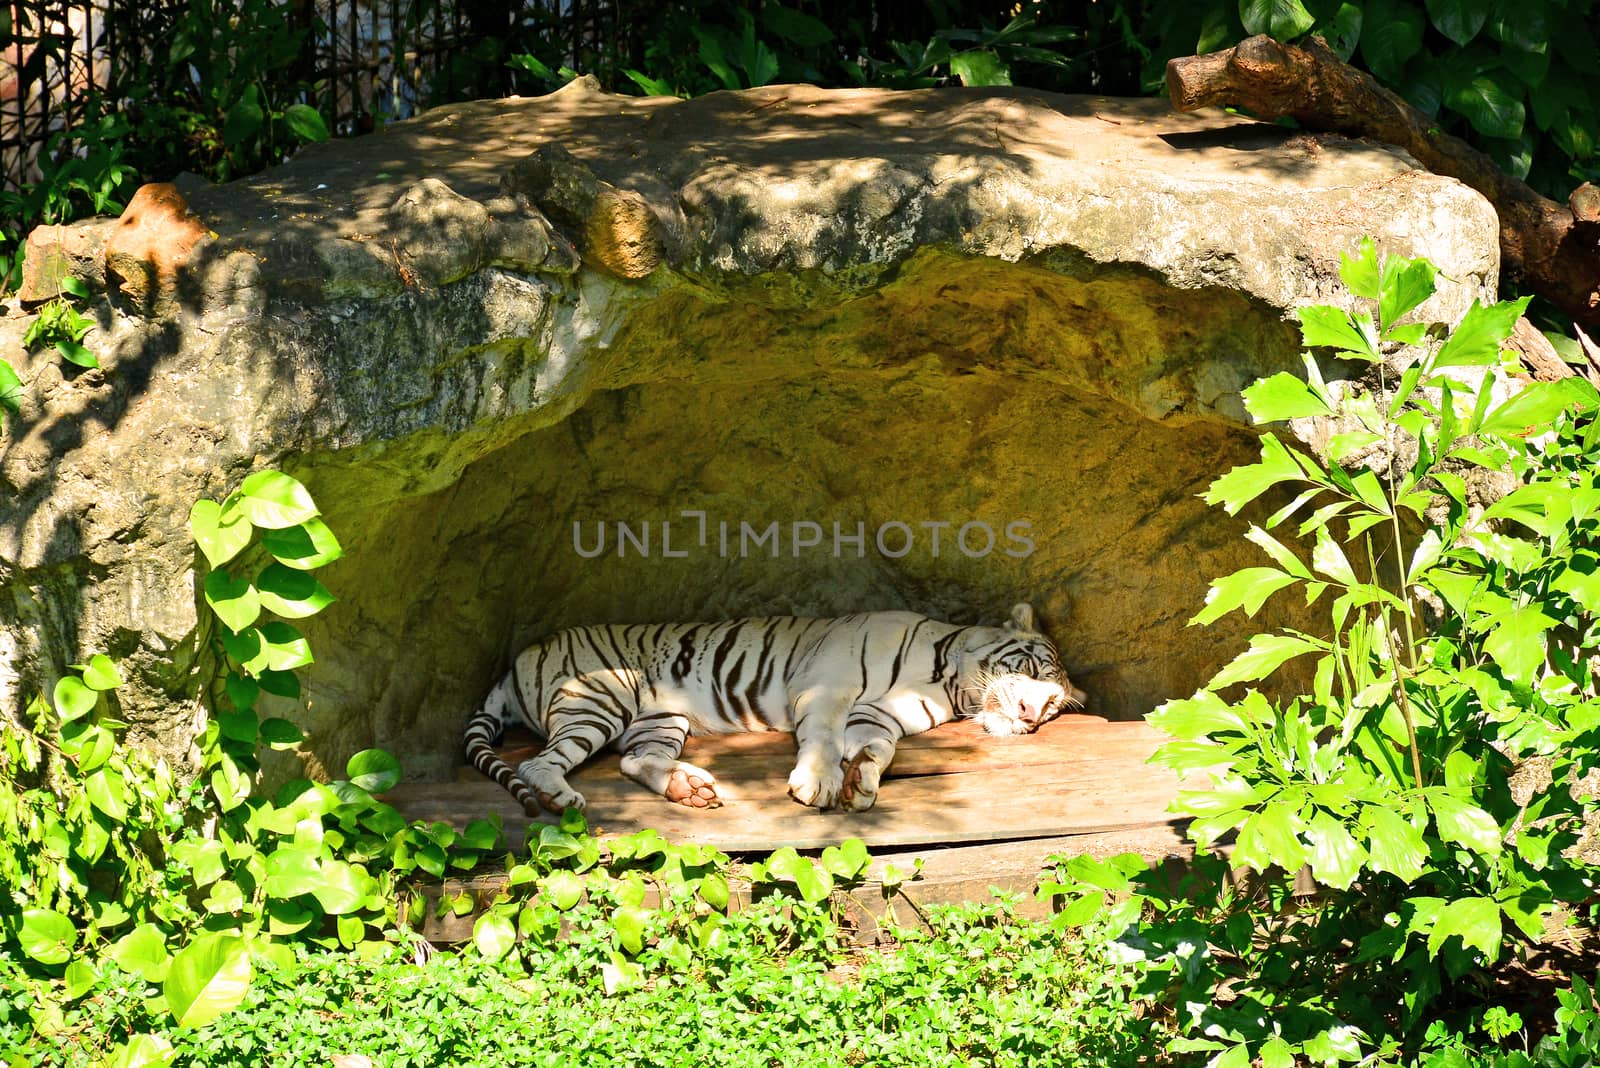 BANGKOK, TH - DEC 13: White tiger at Dusit Zoo on December 13, 2016 in Khao Din Park, Bangkok, Thailand. Dusit Zoo is the oldest zoo in Bangkok, Thailand.